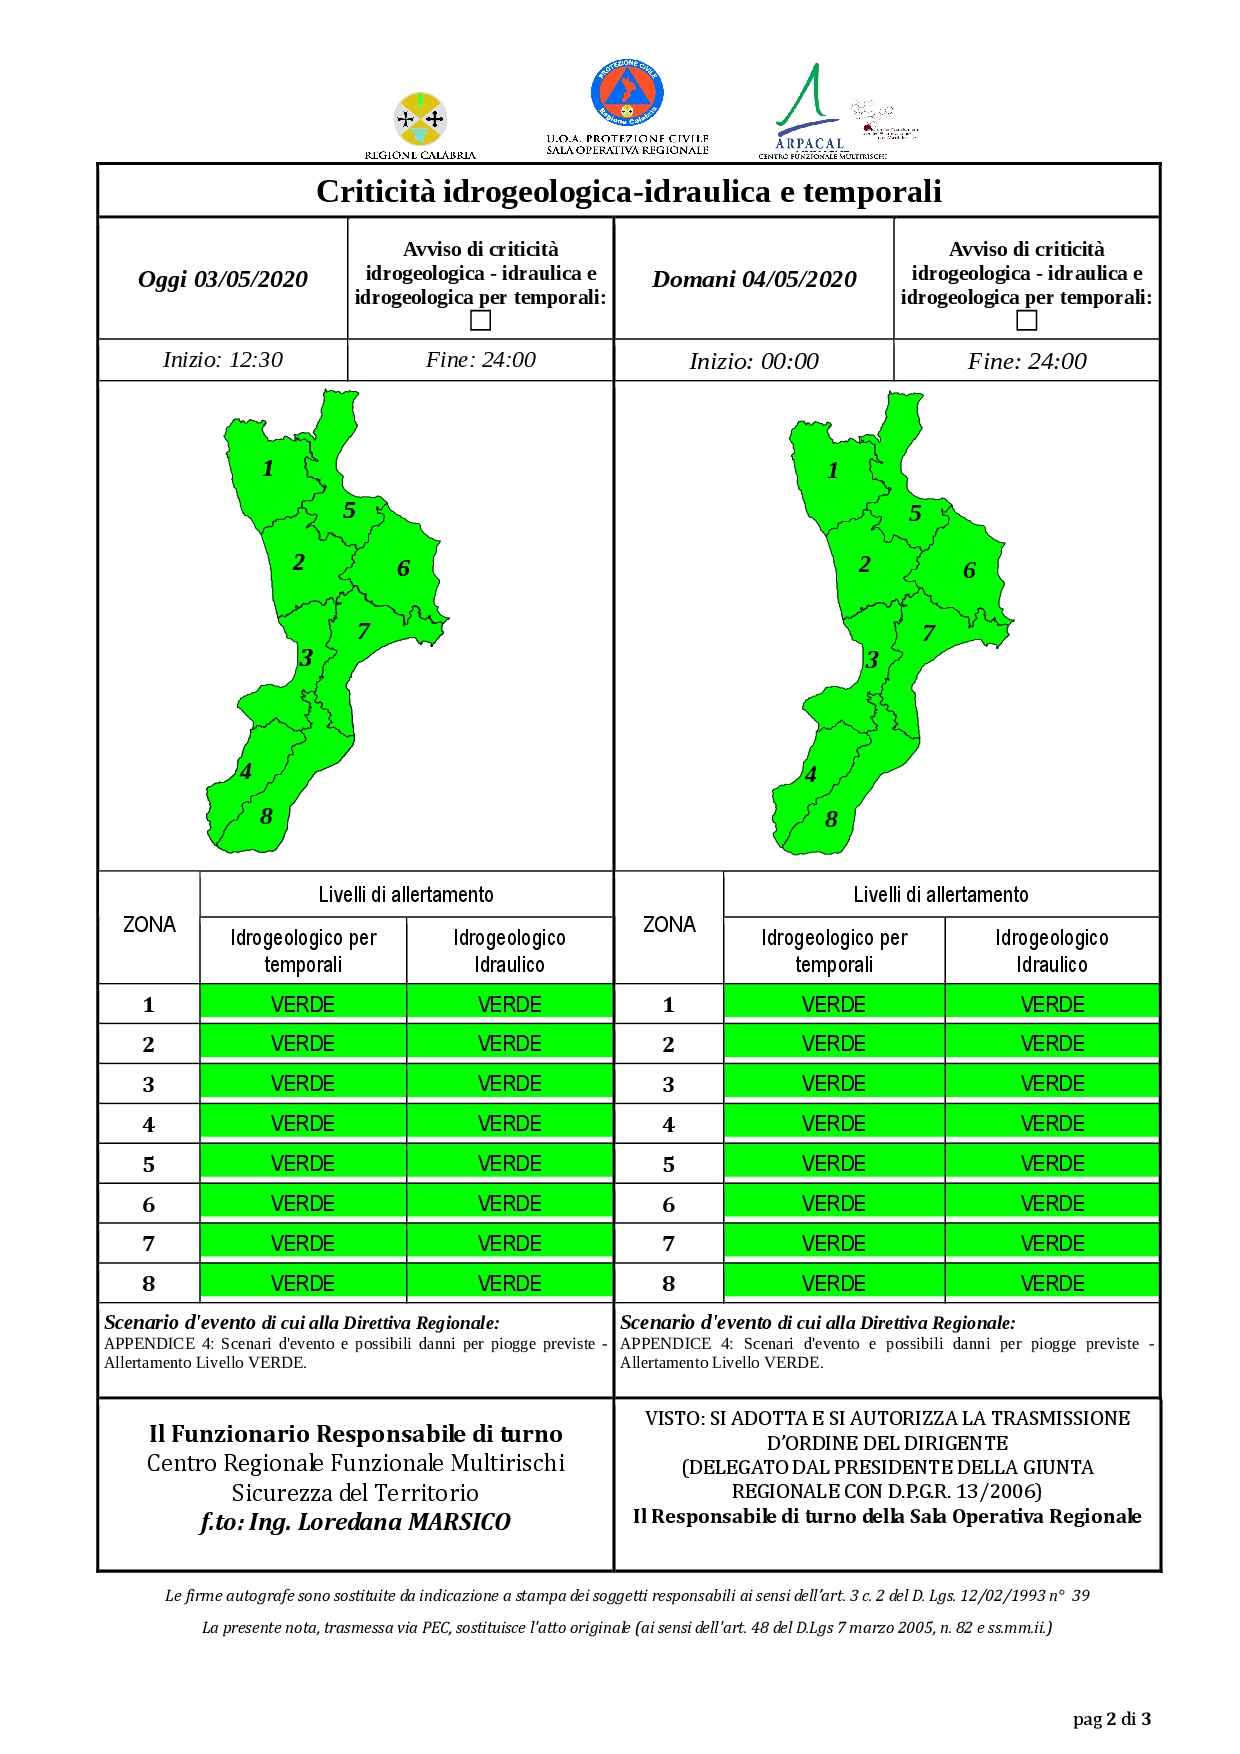 Criticità idrogeologica-idraulica e temporali in Calabria 03-05-2020